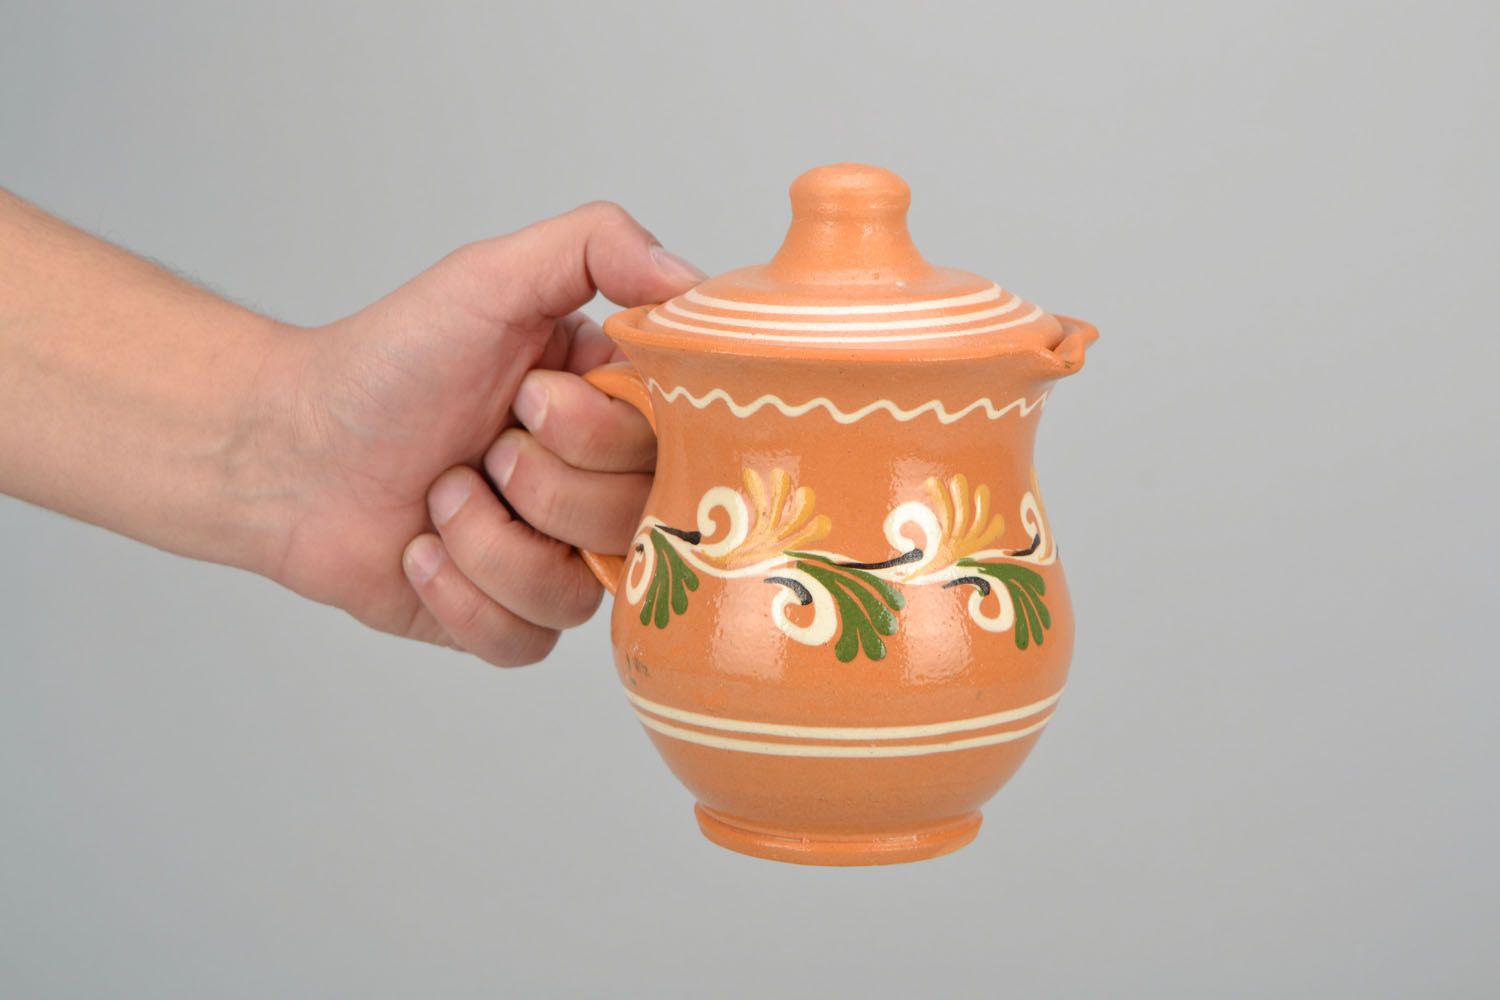 12 oz ceramic porcelain creamer pitcher with hand-painted floral design 1,23 lb photo 2